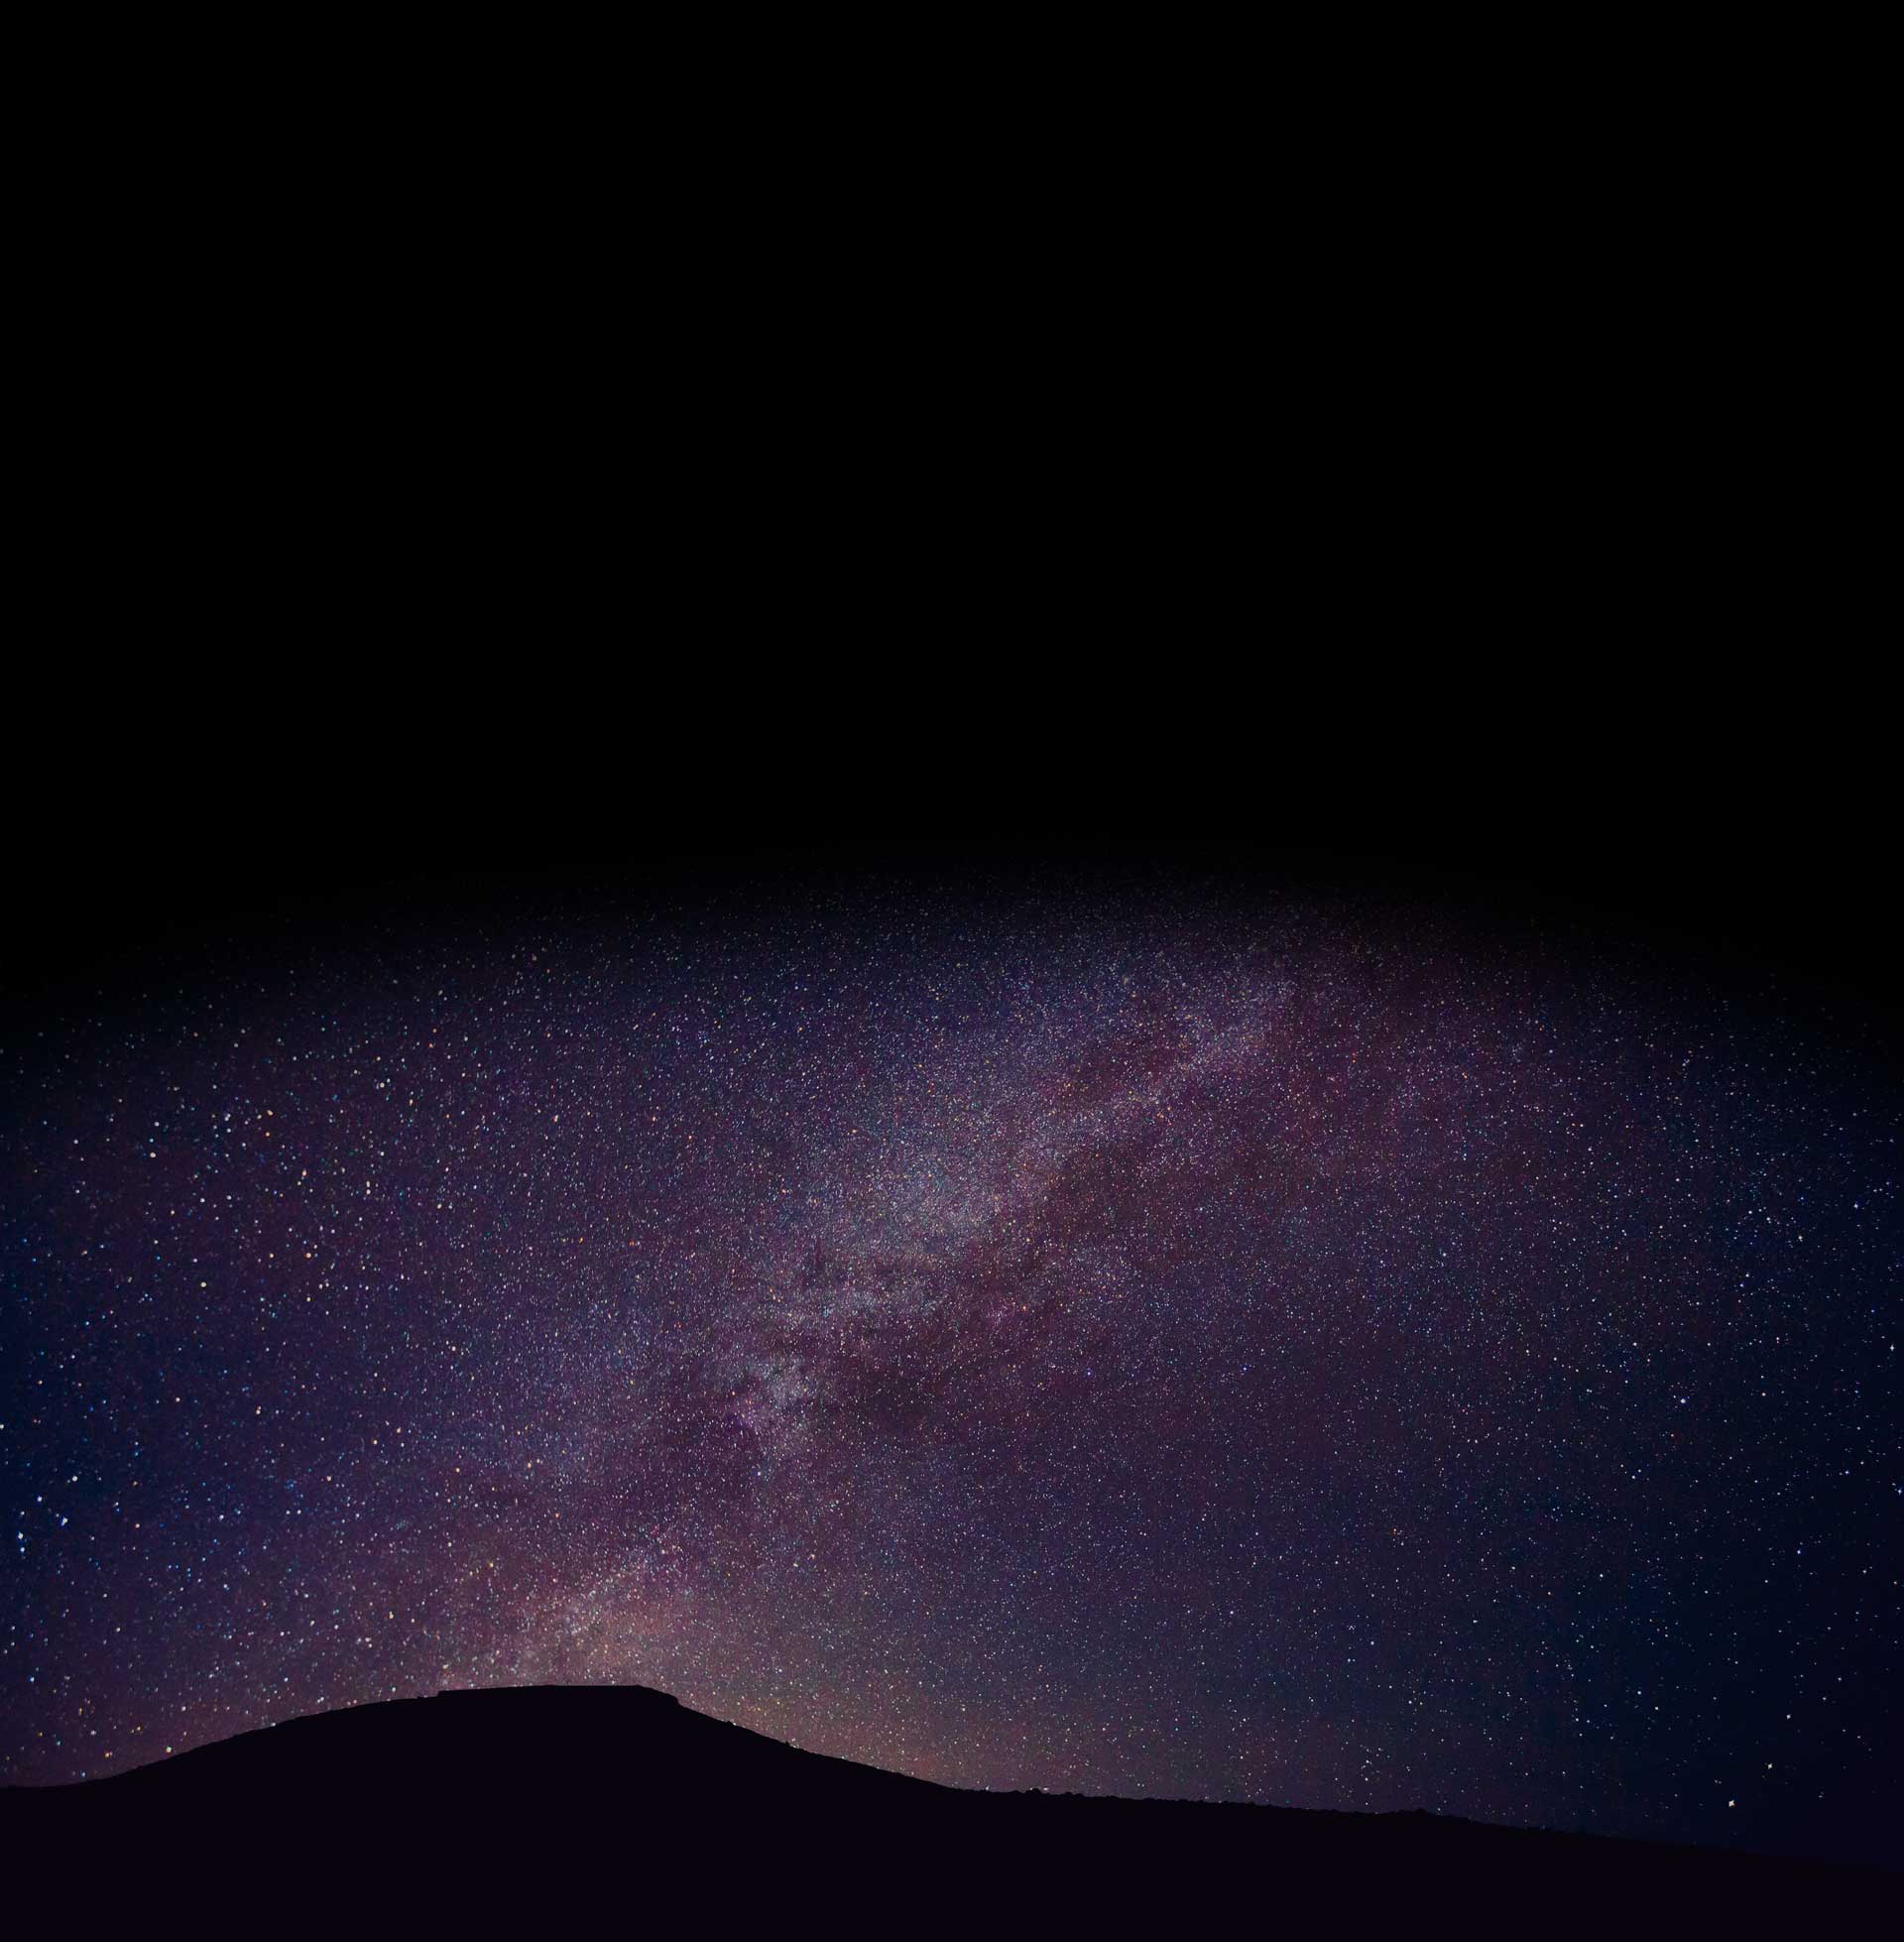 night sky with stars - Galaxy IT